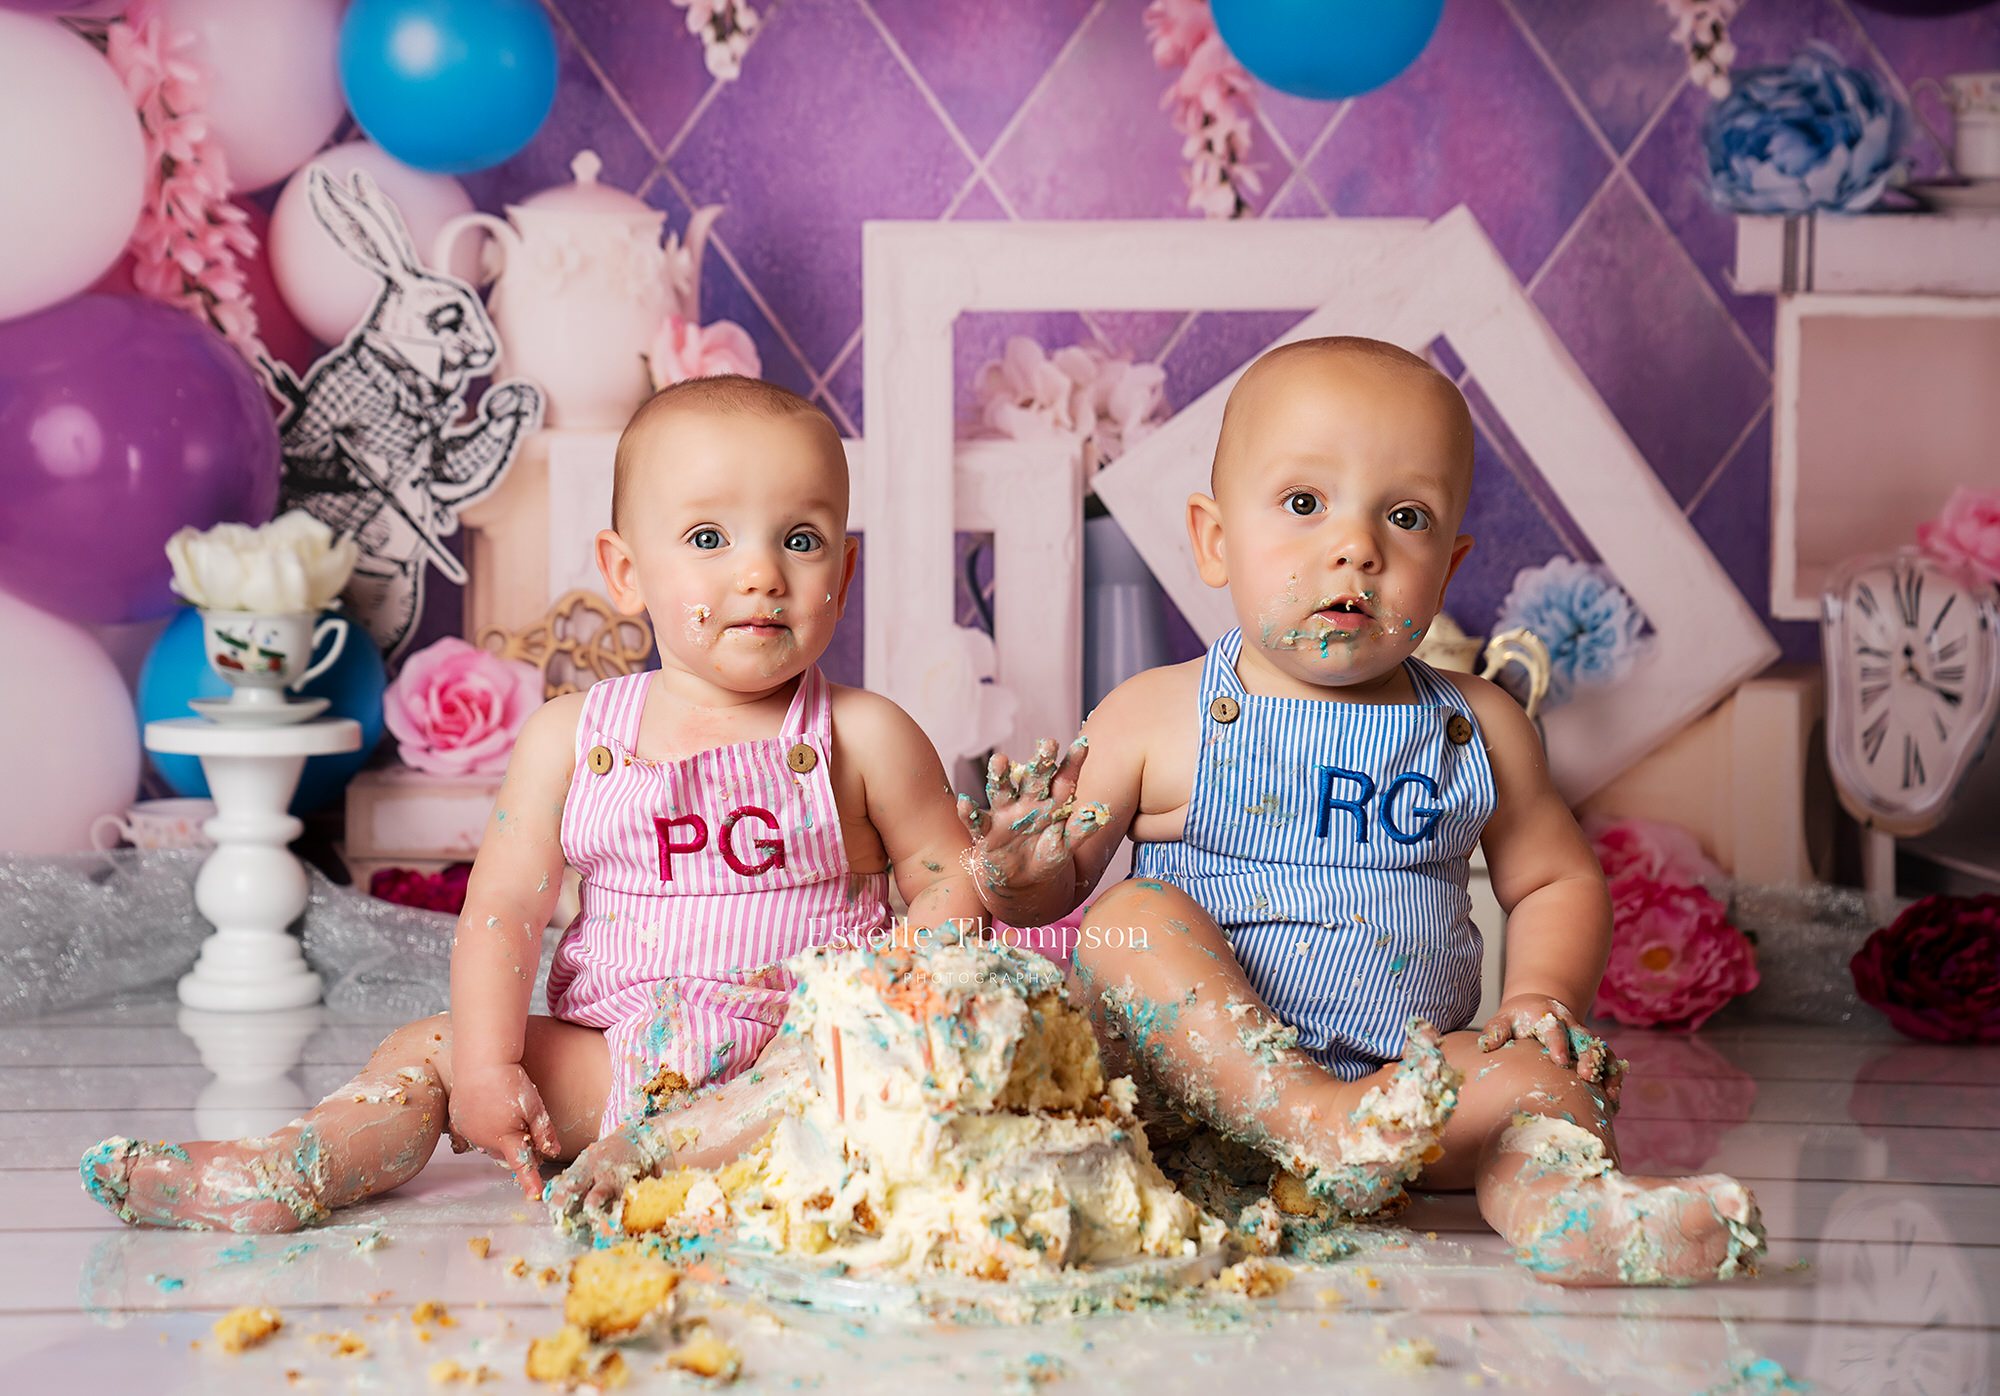 Twins eating birthday cake at first birthday cake smash photoshoot